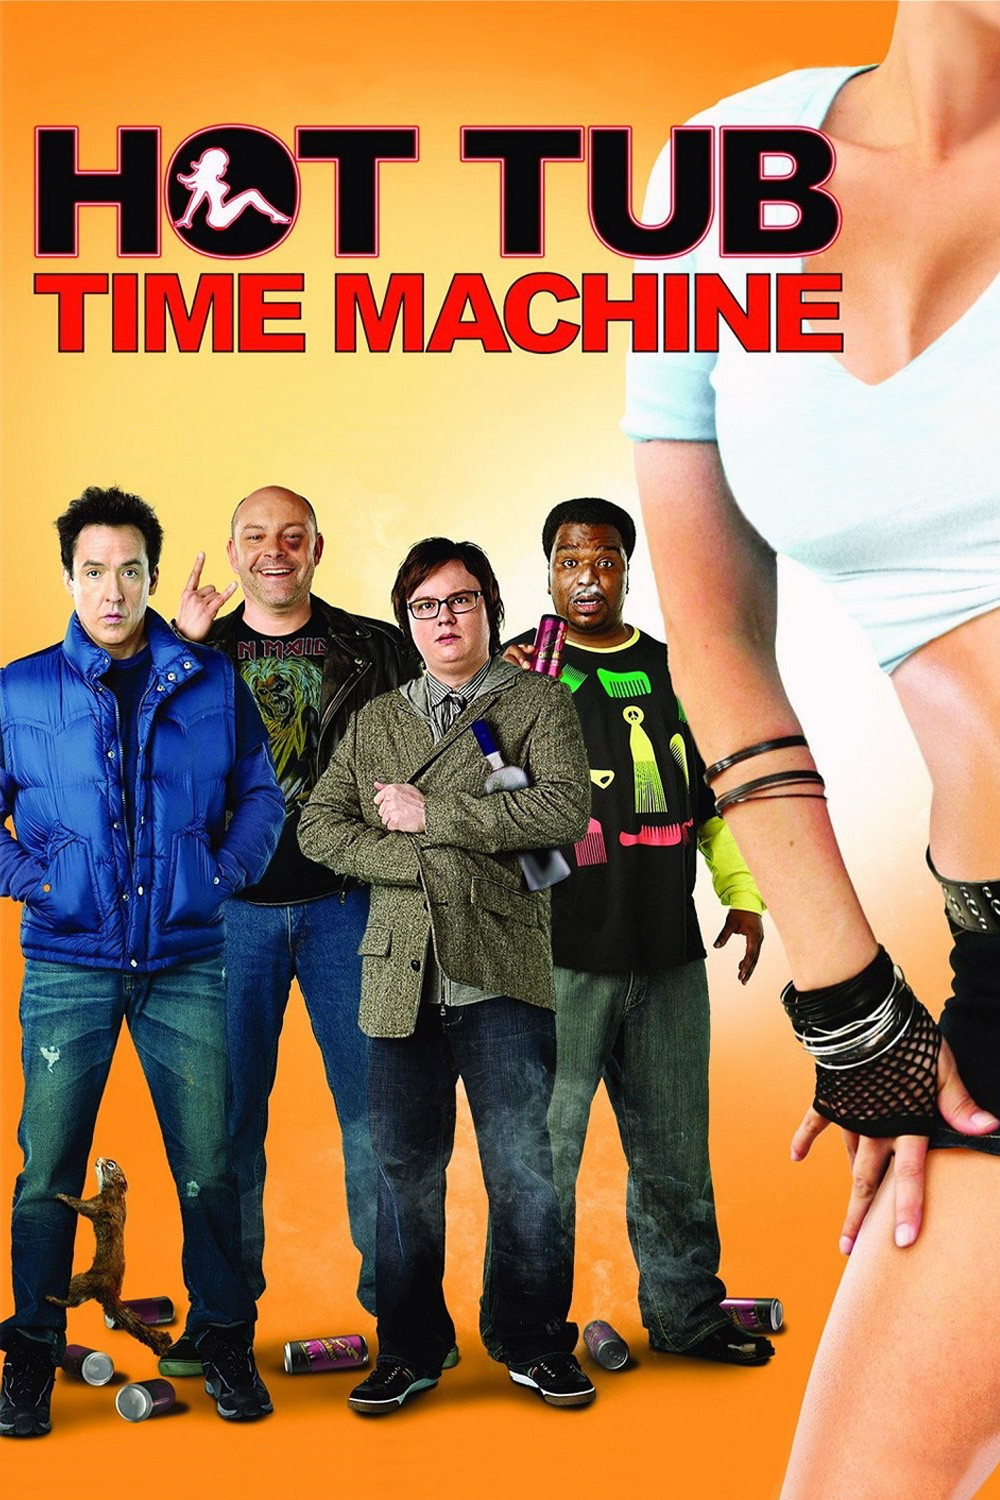 Hot Tub Time Machine poster